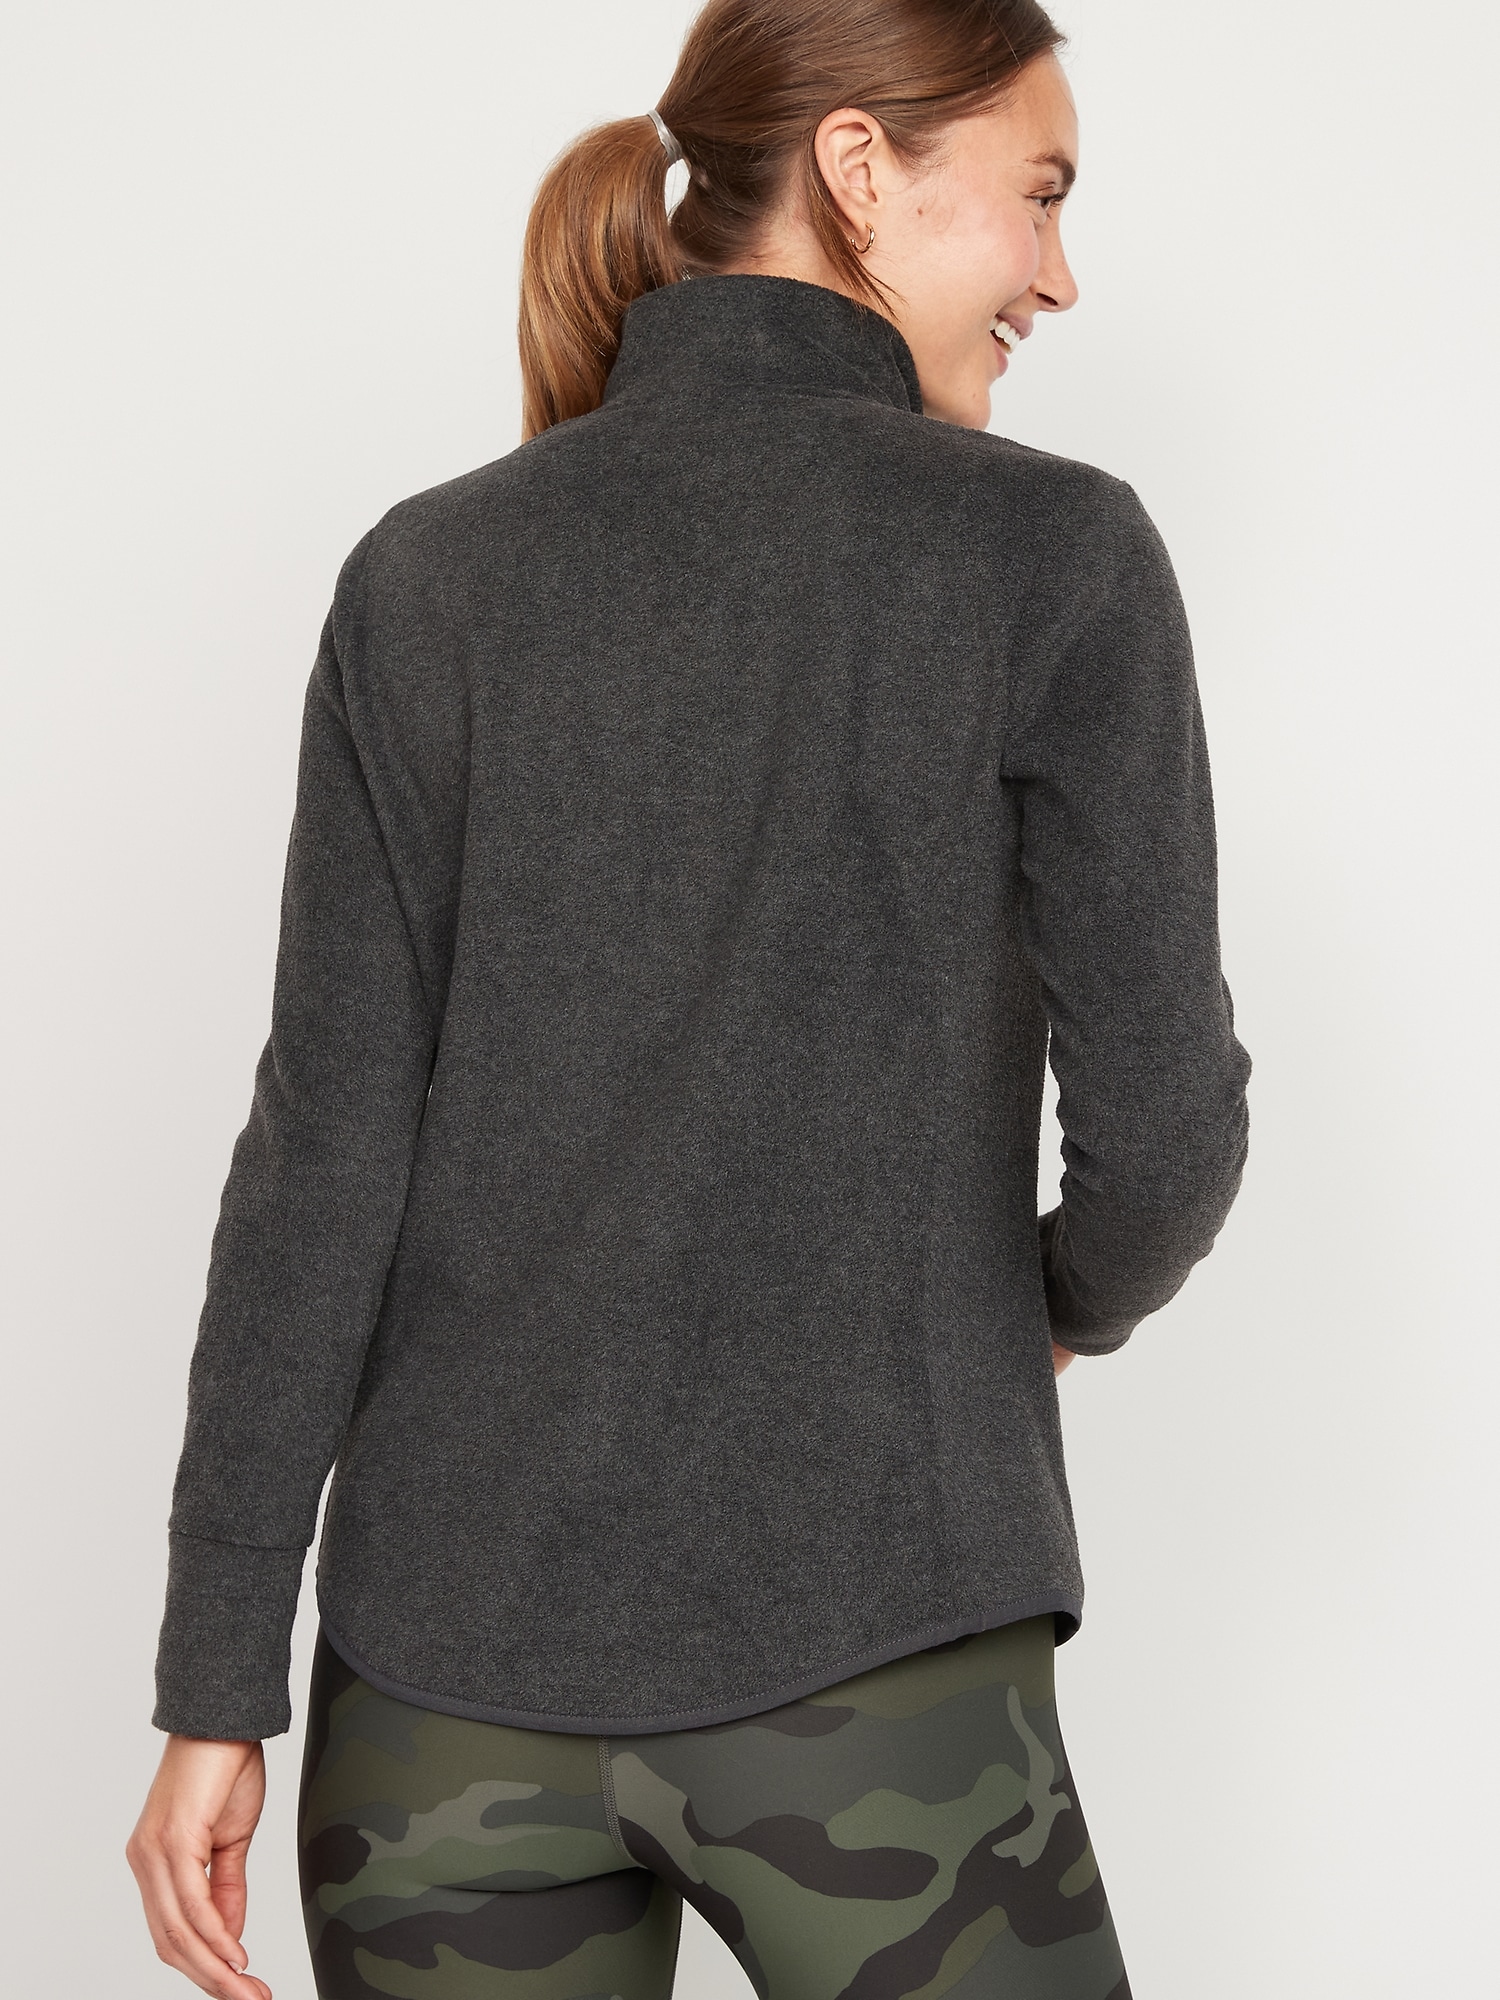 Fleece Ladies Full Zip Premium Jackets Sizes 8 to 22 Suitable for